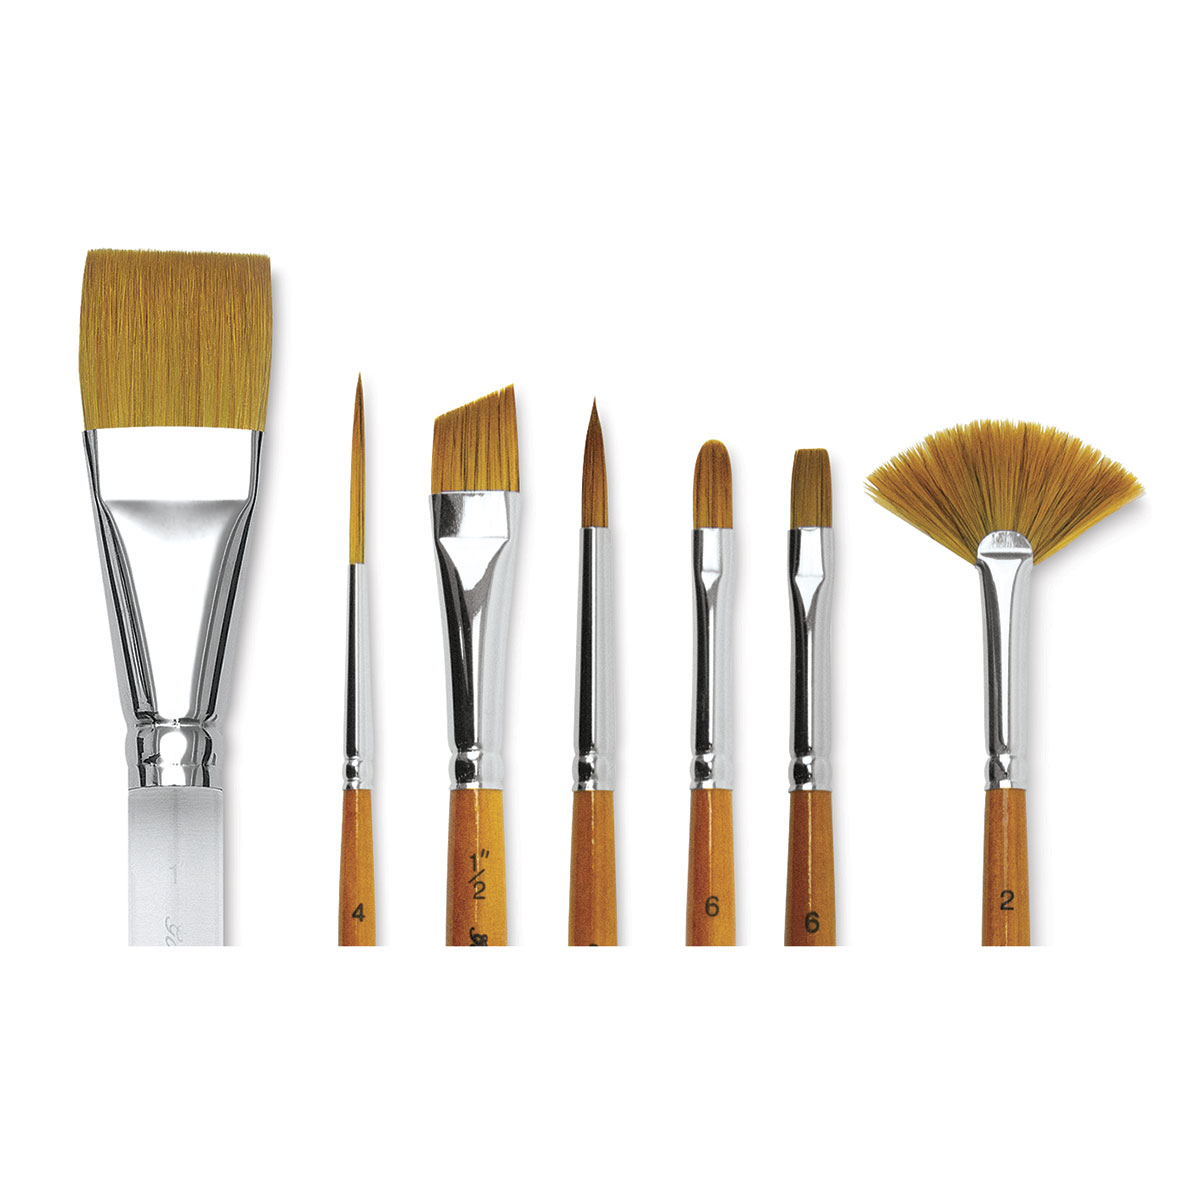 Kolinsky and Sable Brushes | BLICK Art Materials